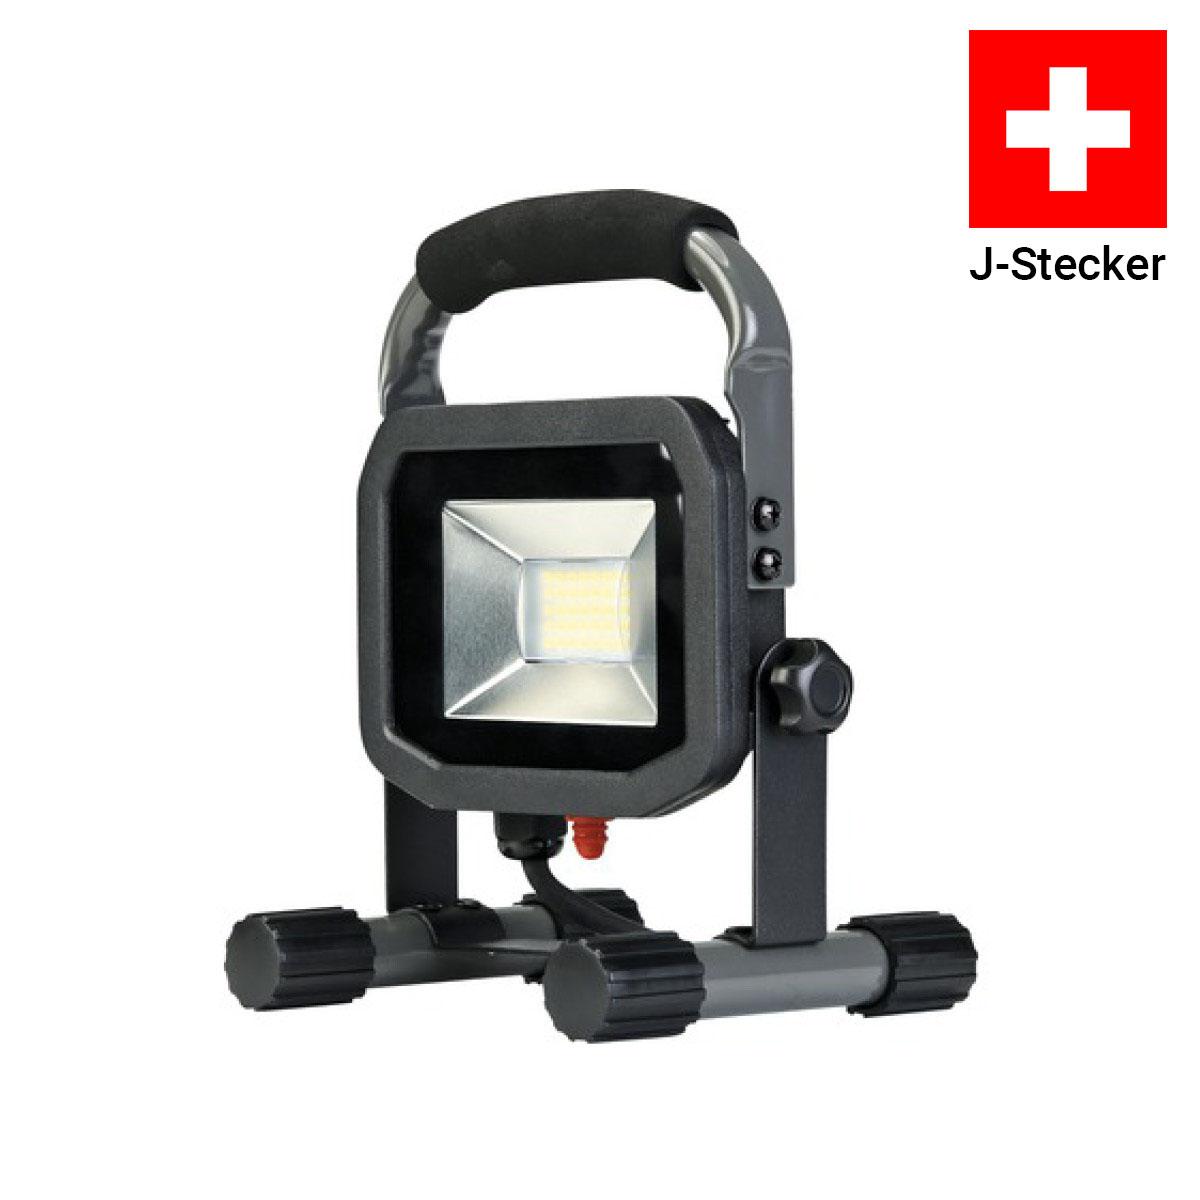 Luceco LED Strahler IP65 15W 1200lm Schweizer J-Stecker 5000K kaltweiß schwarz/grau